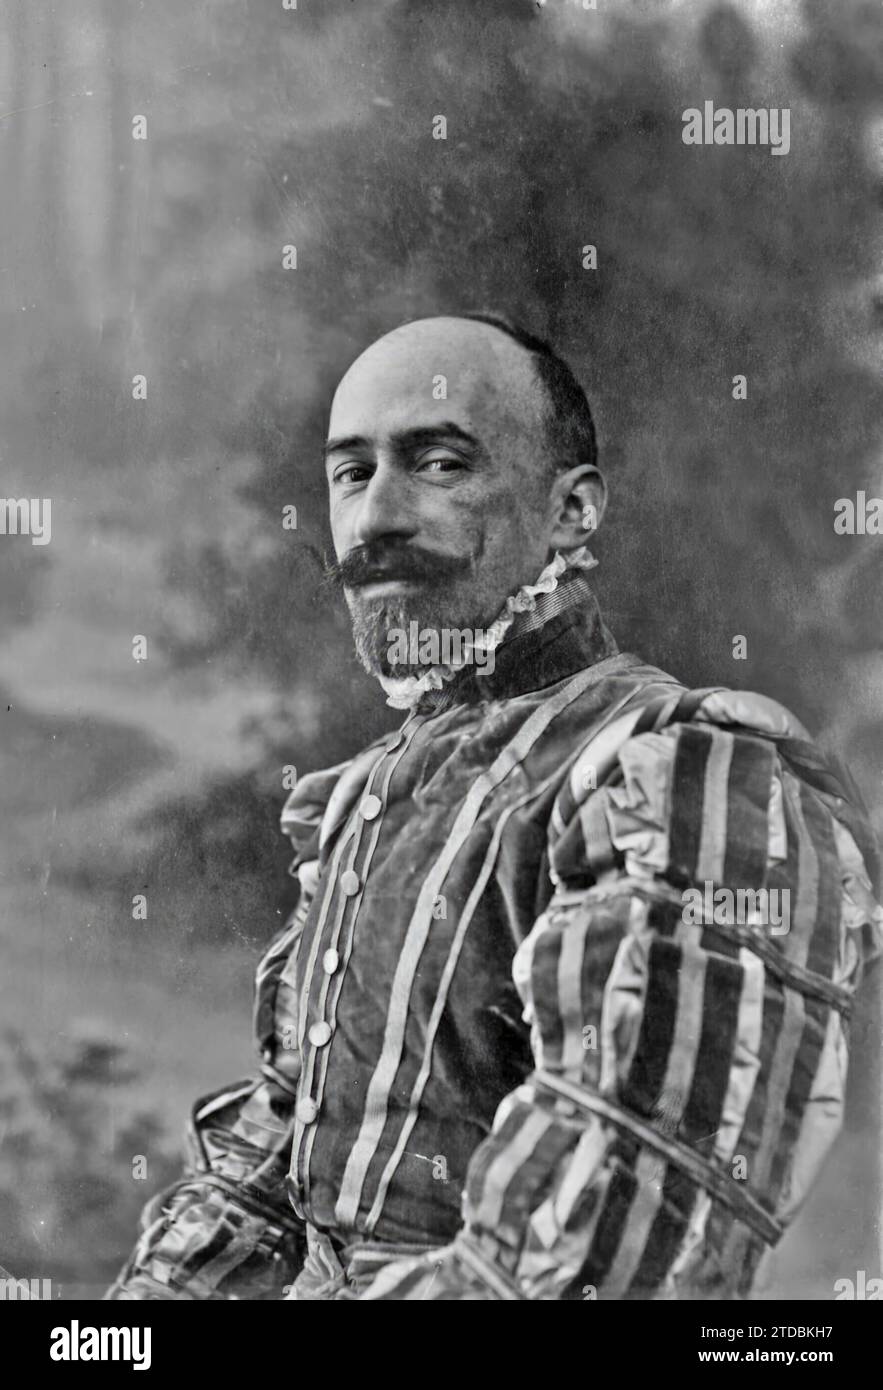 11/13/1911. Jacinto Benavente plays the role of Don Juan Tenorio in the comedy theater of Madrid. Credit: Album / Archivo ABC / Alfonso Sánchez García Alfonso Stock Photo